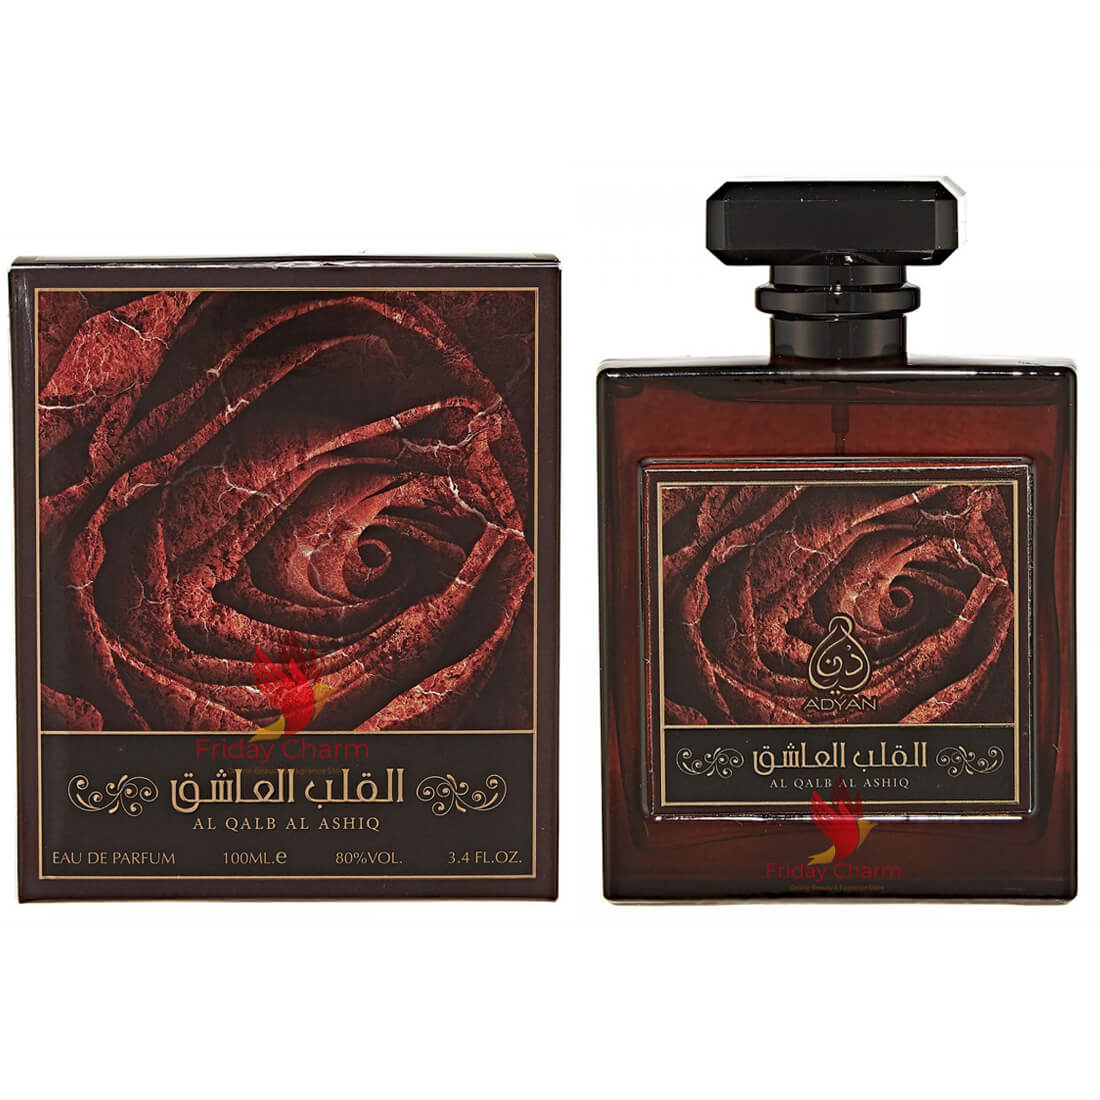 Adyan Al Qalb Al Ashiq Perfume Spray - 100ml